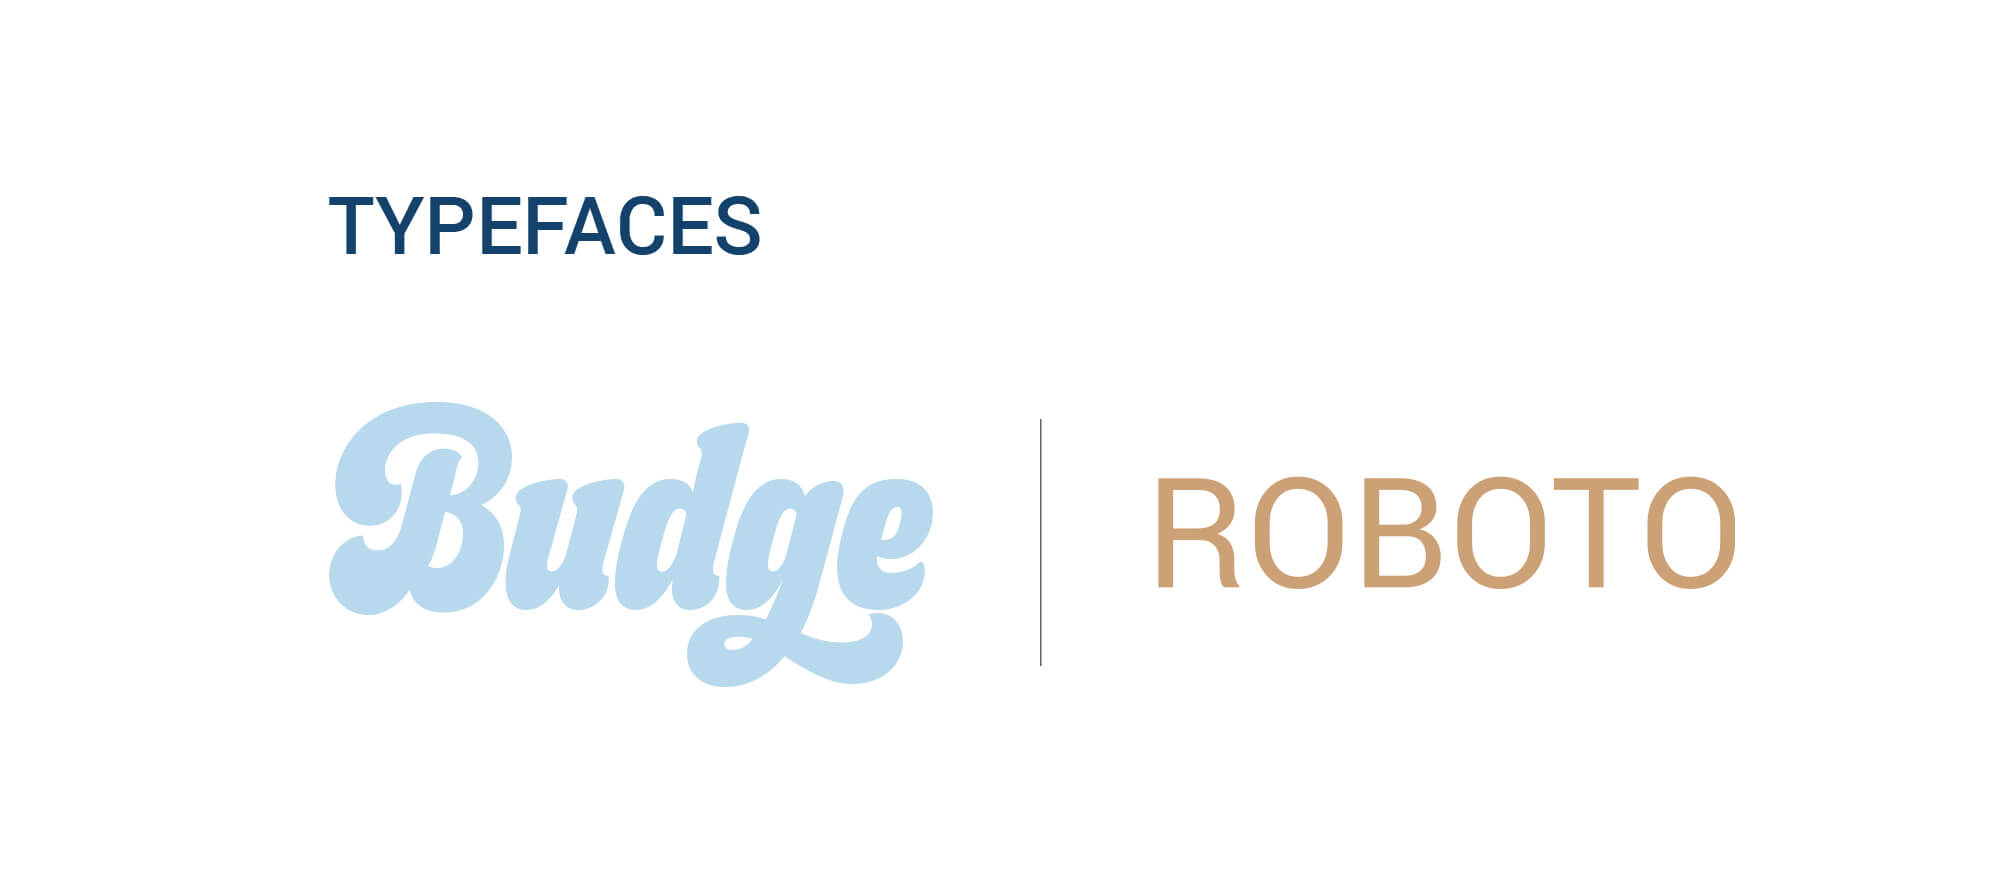 Typography Budge font, Roboto font